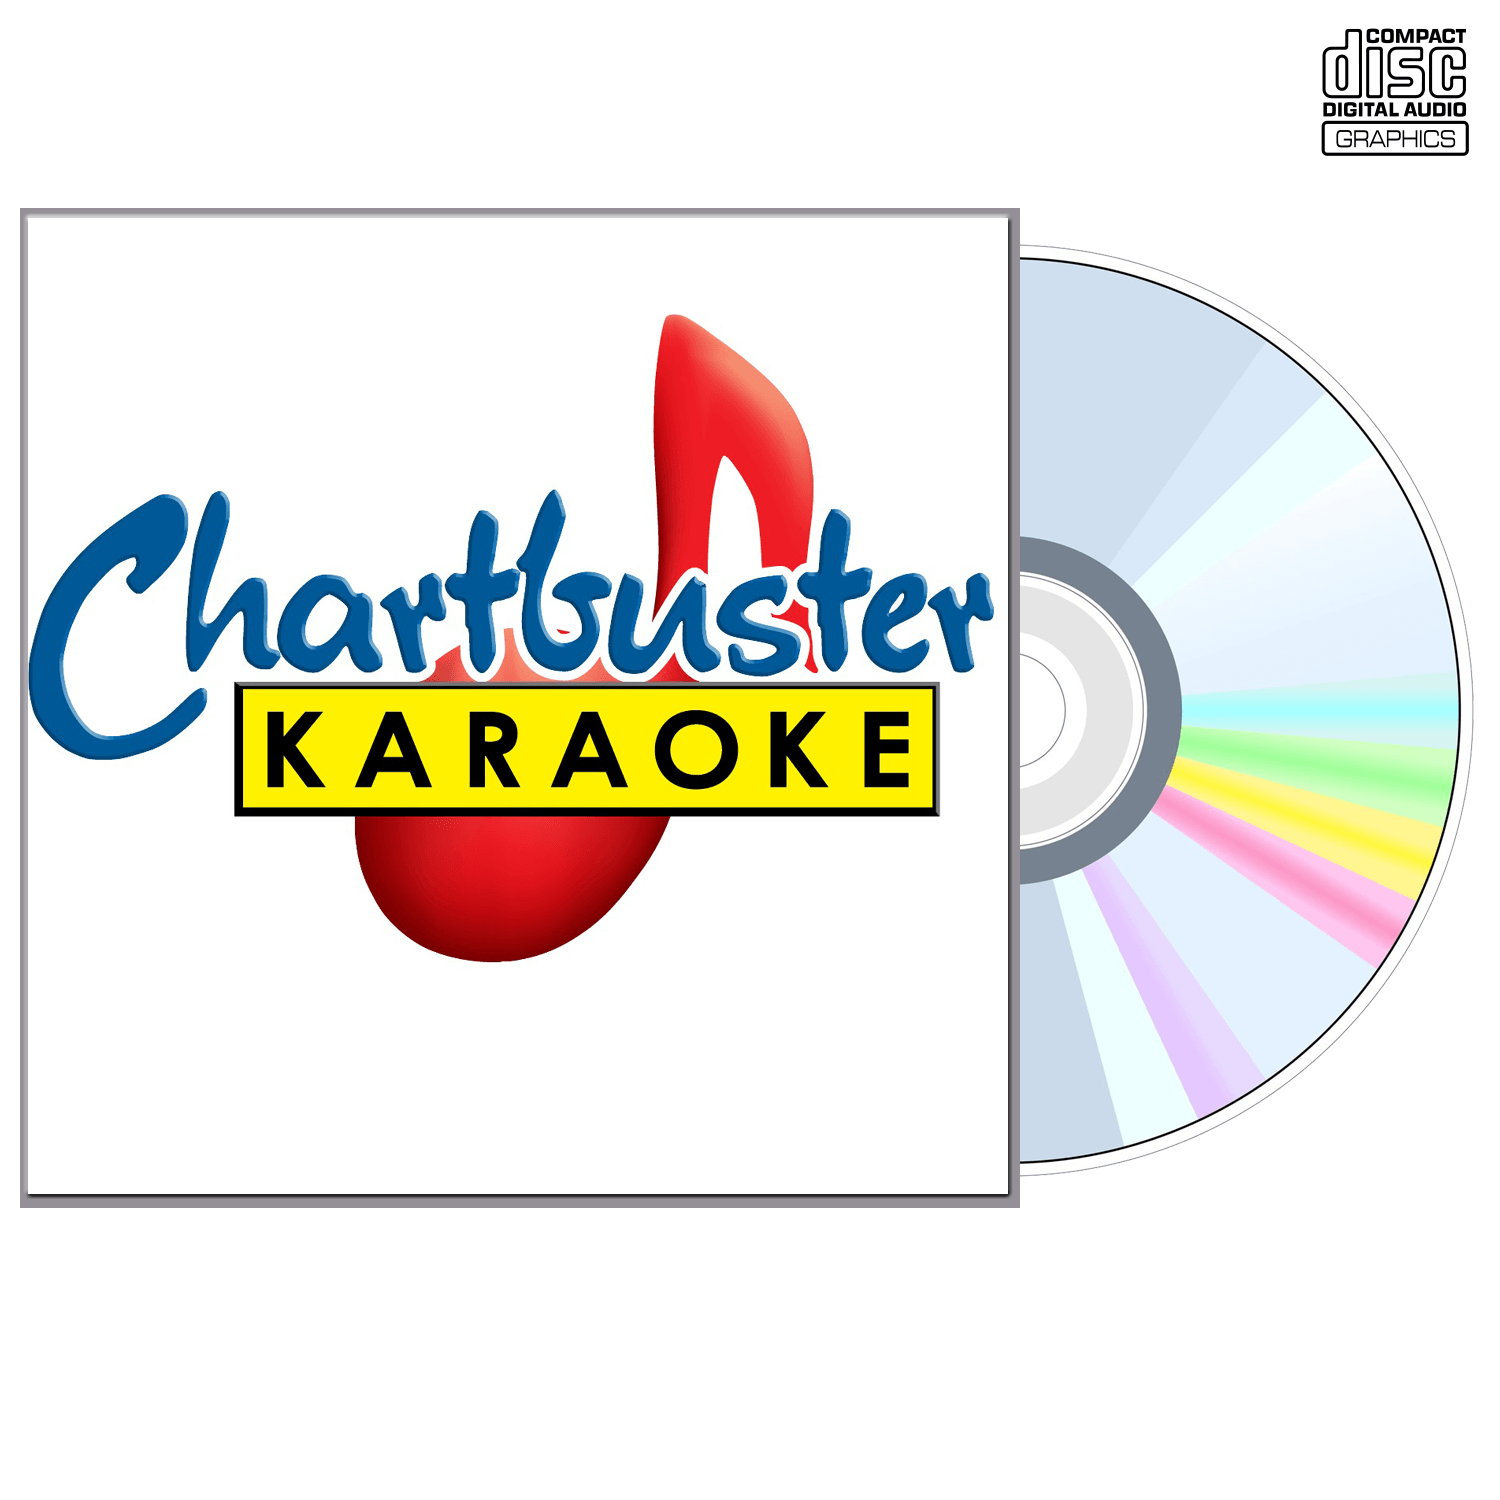 Ryan Cabrera - CD+G - Chartbuster Karaoke - Karaoke Home Entertainment